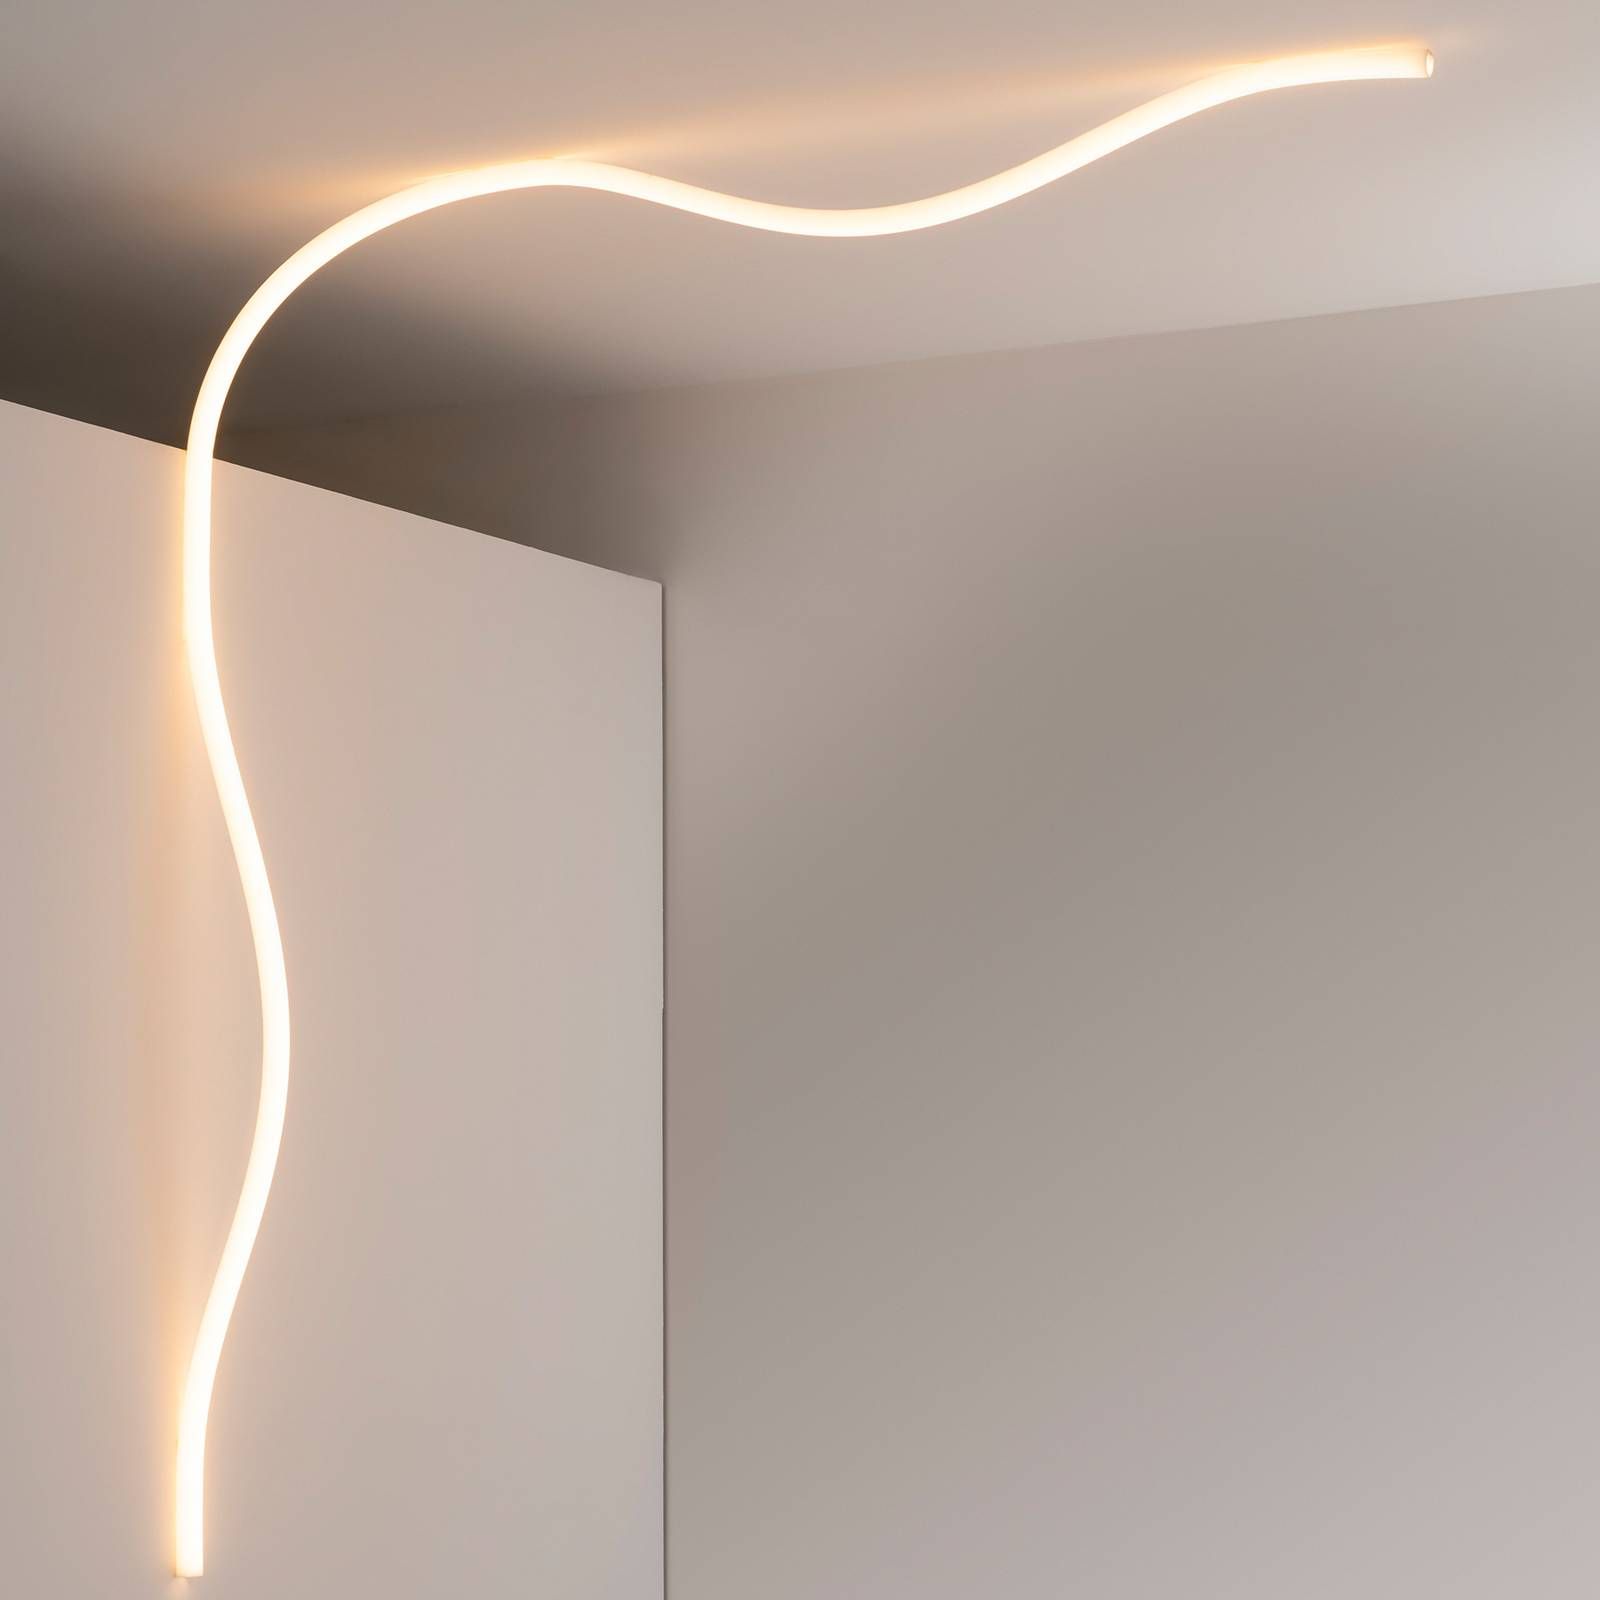 Artemide La linea svetelný LED had, 2, 5 metrov, Obývacia izba / jedáleň, silikón, 12.5W, P: 250 cm